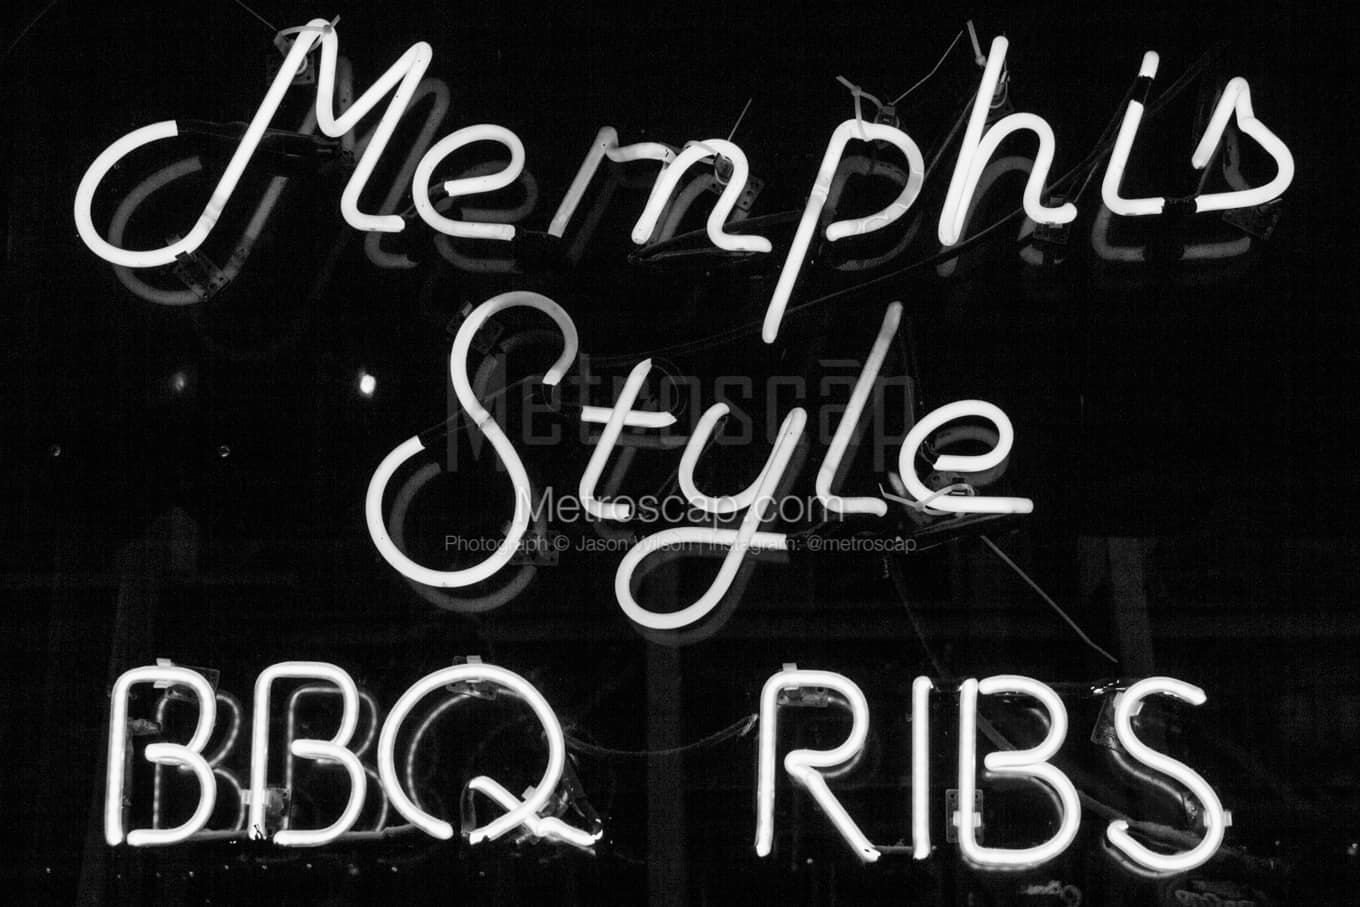 Black & White Memphis Architecture Pictures